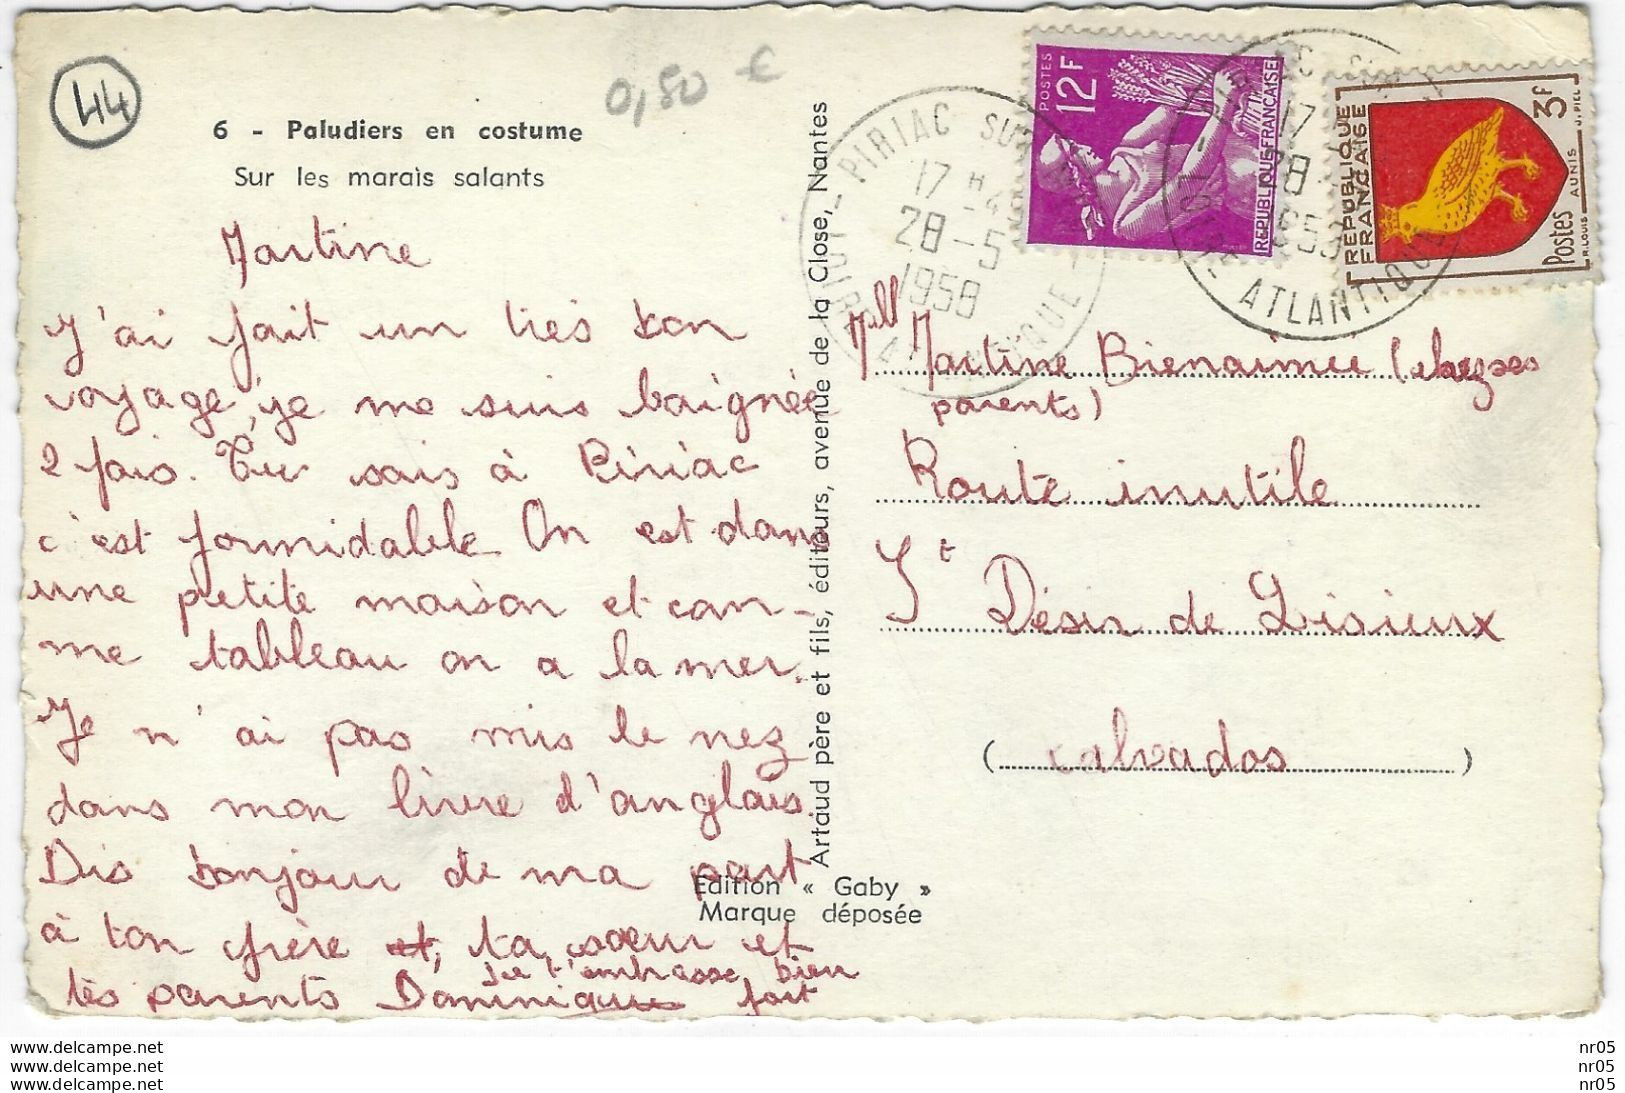 FRANCE - Cachet Postal Jumelé " PIRIAC Sur MER - LOIRE ATLANTIQUE " 1958 Timbre Blason AUNIS + Moissonneuse 12 F Marais - 1921-1960: Modern Period